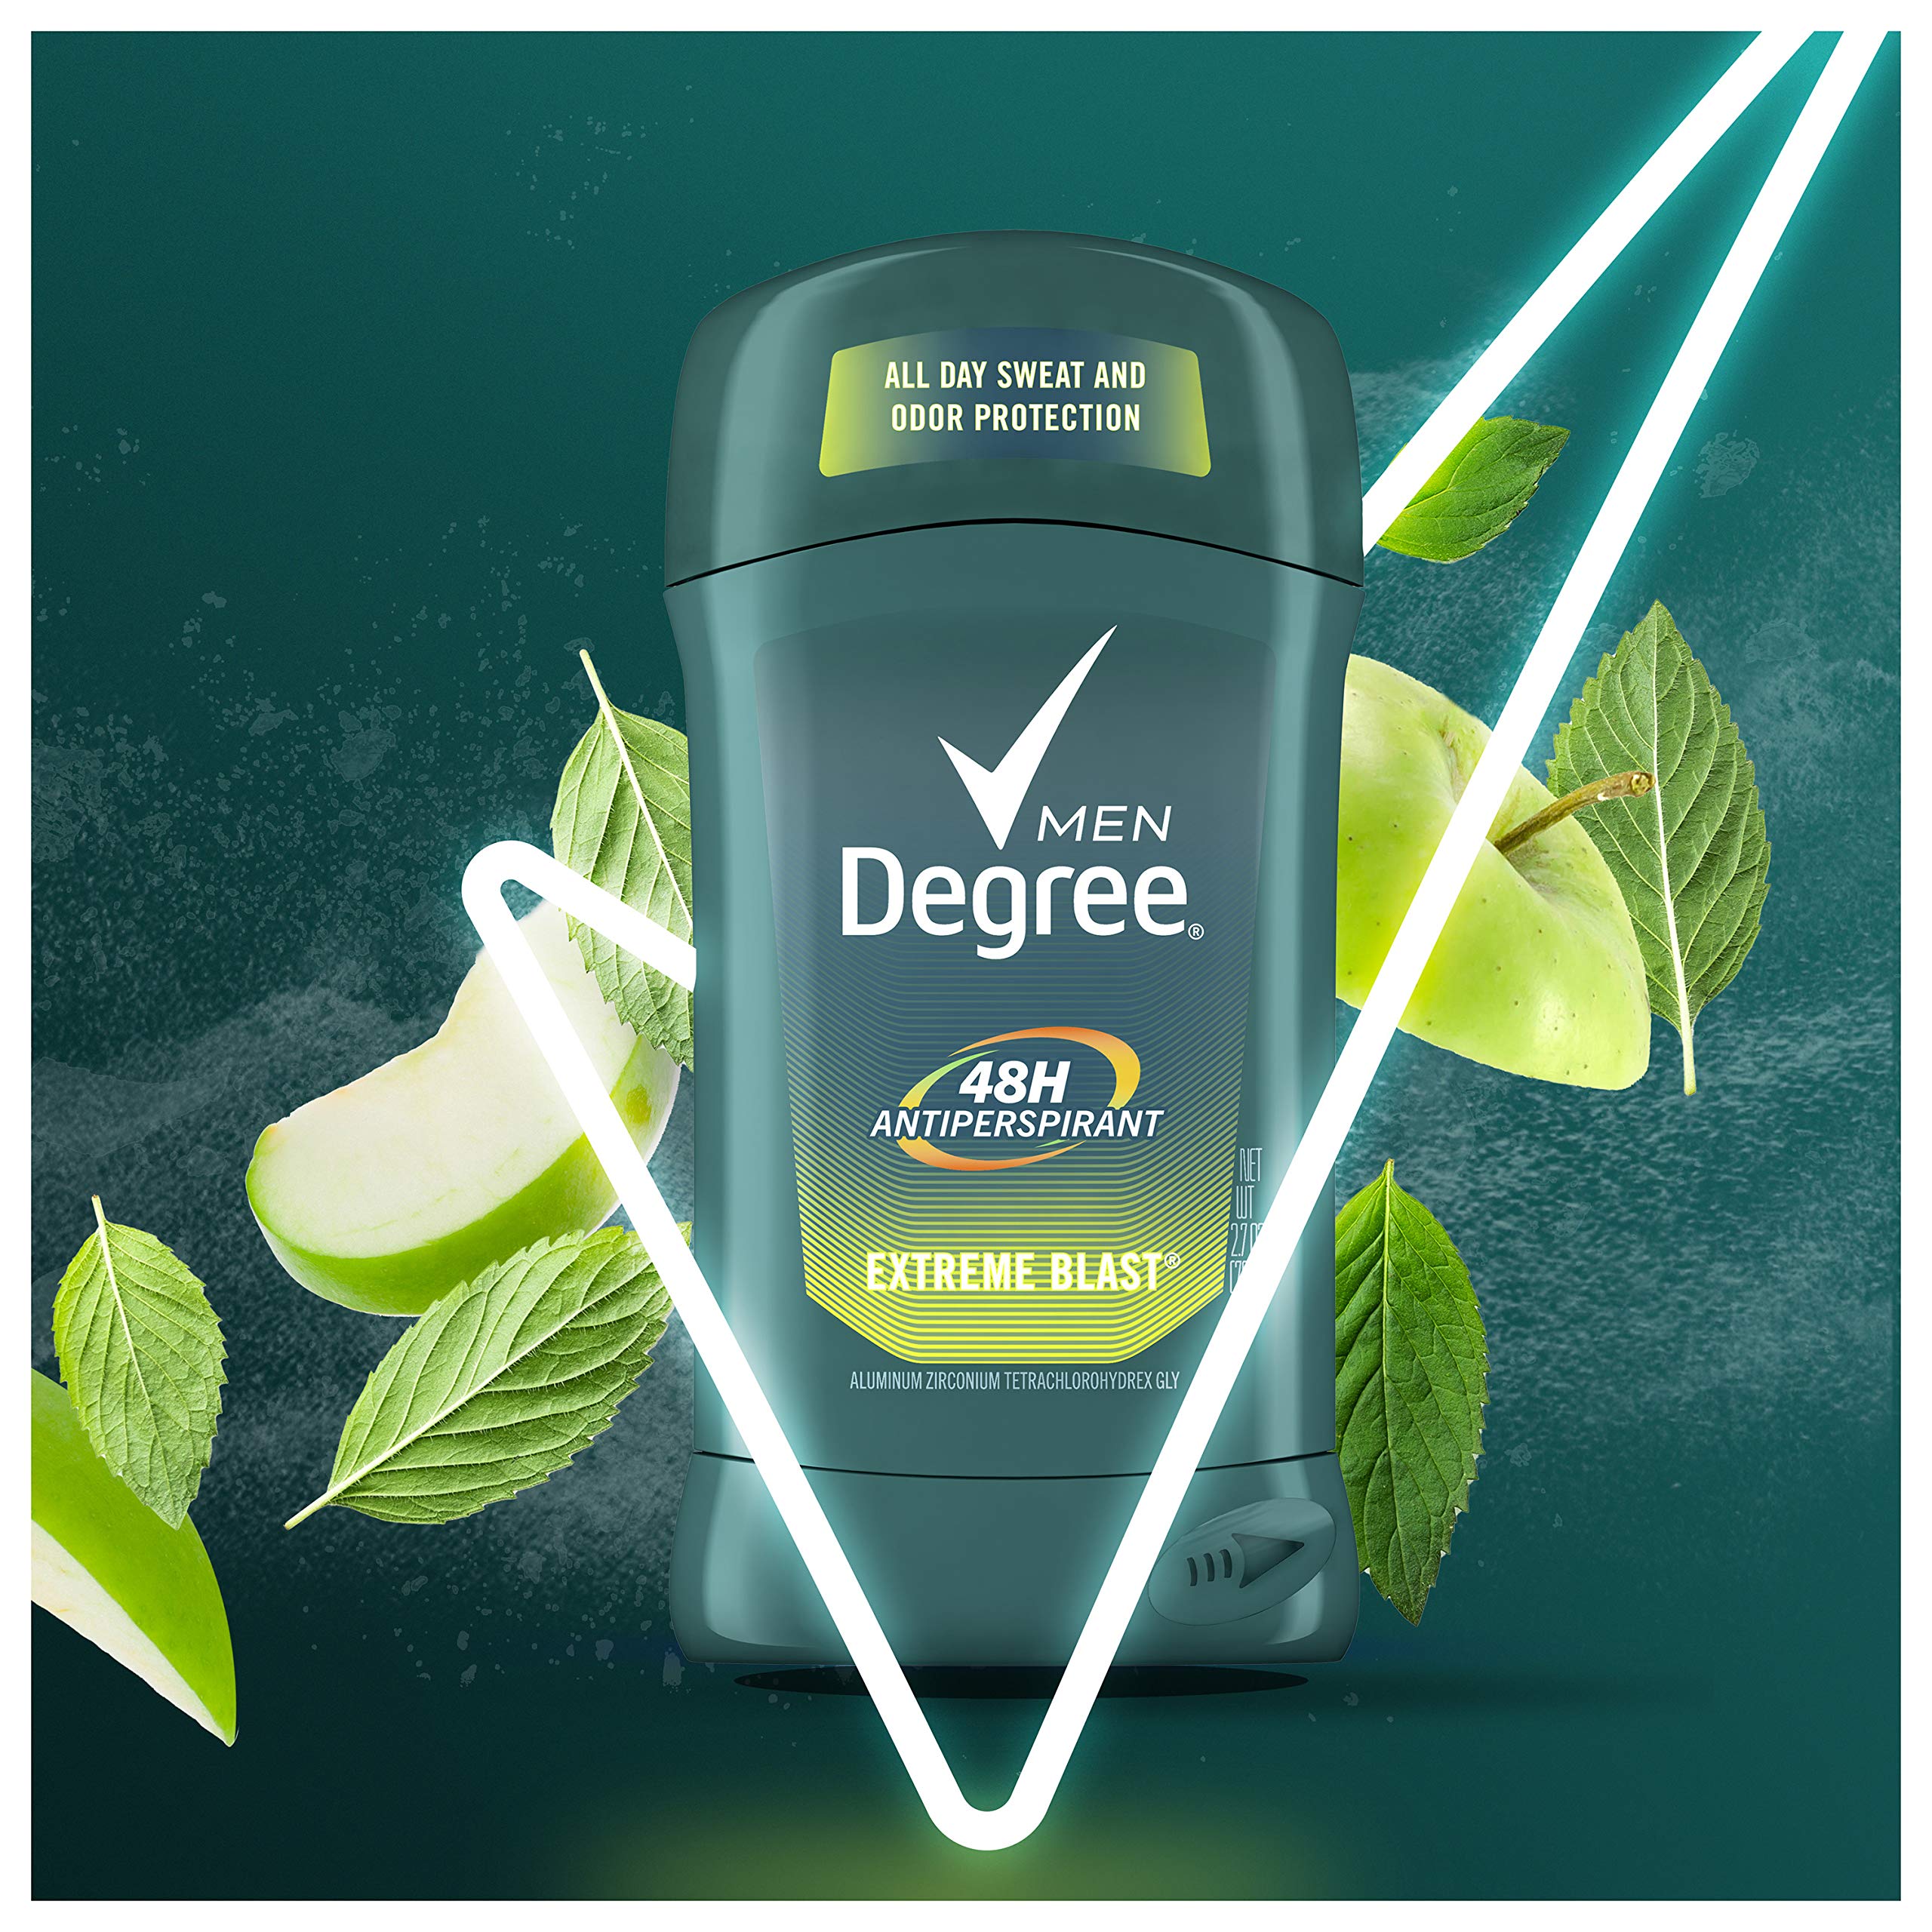 Degree Men Original Antiperspirant Deodorant 48-Hour Odor Protection Extreme Blast Mens Deodorant Stick 2.7 oz, 2 Count